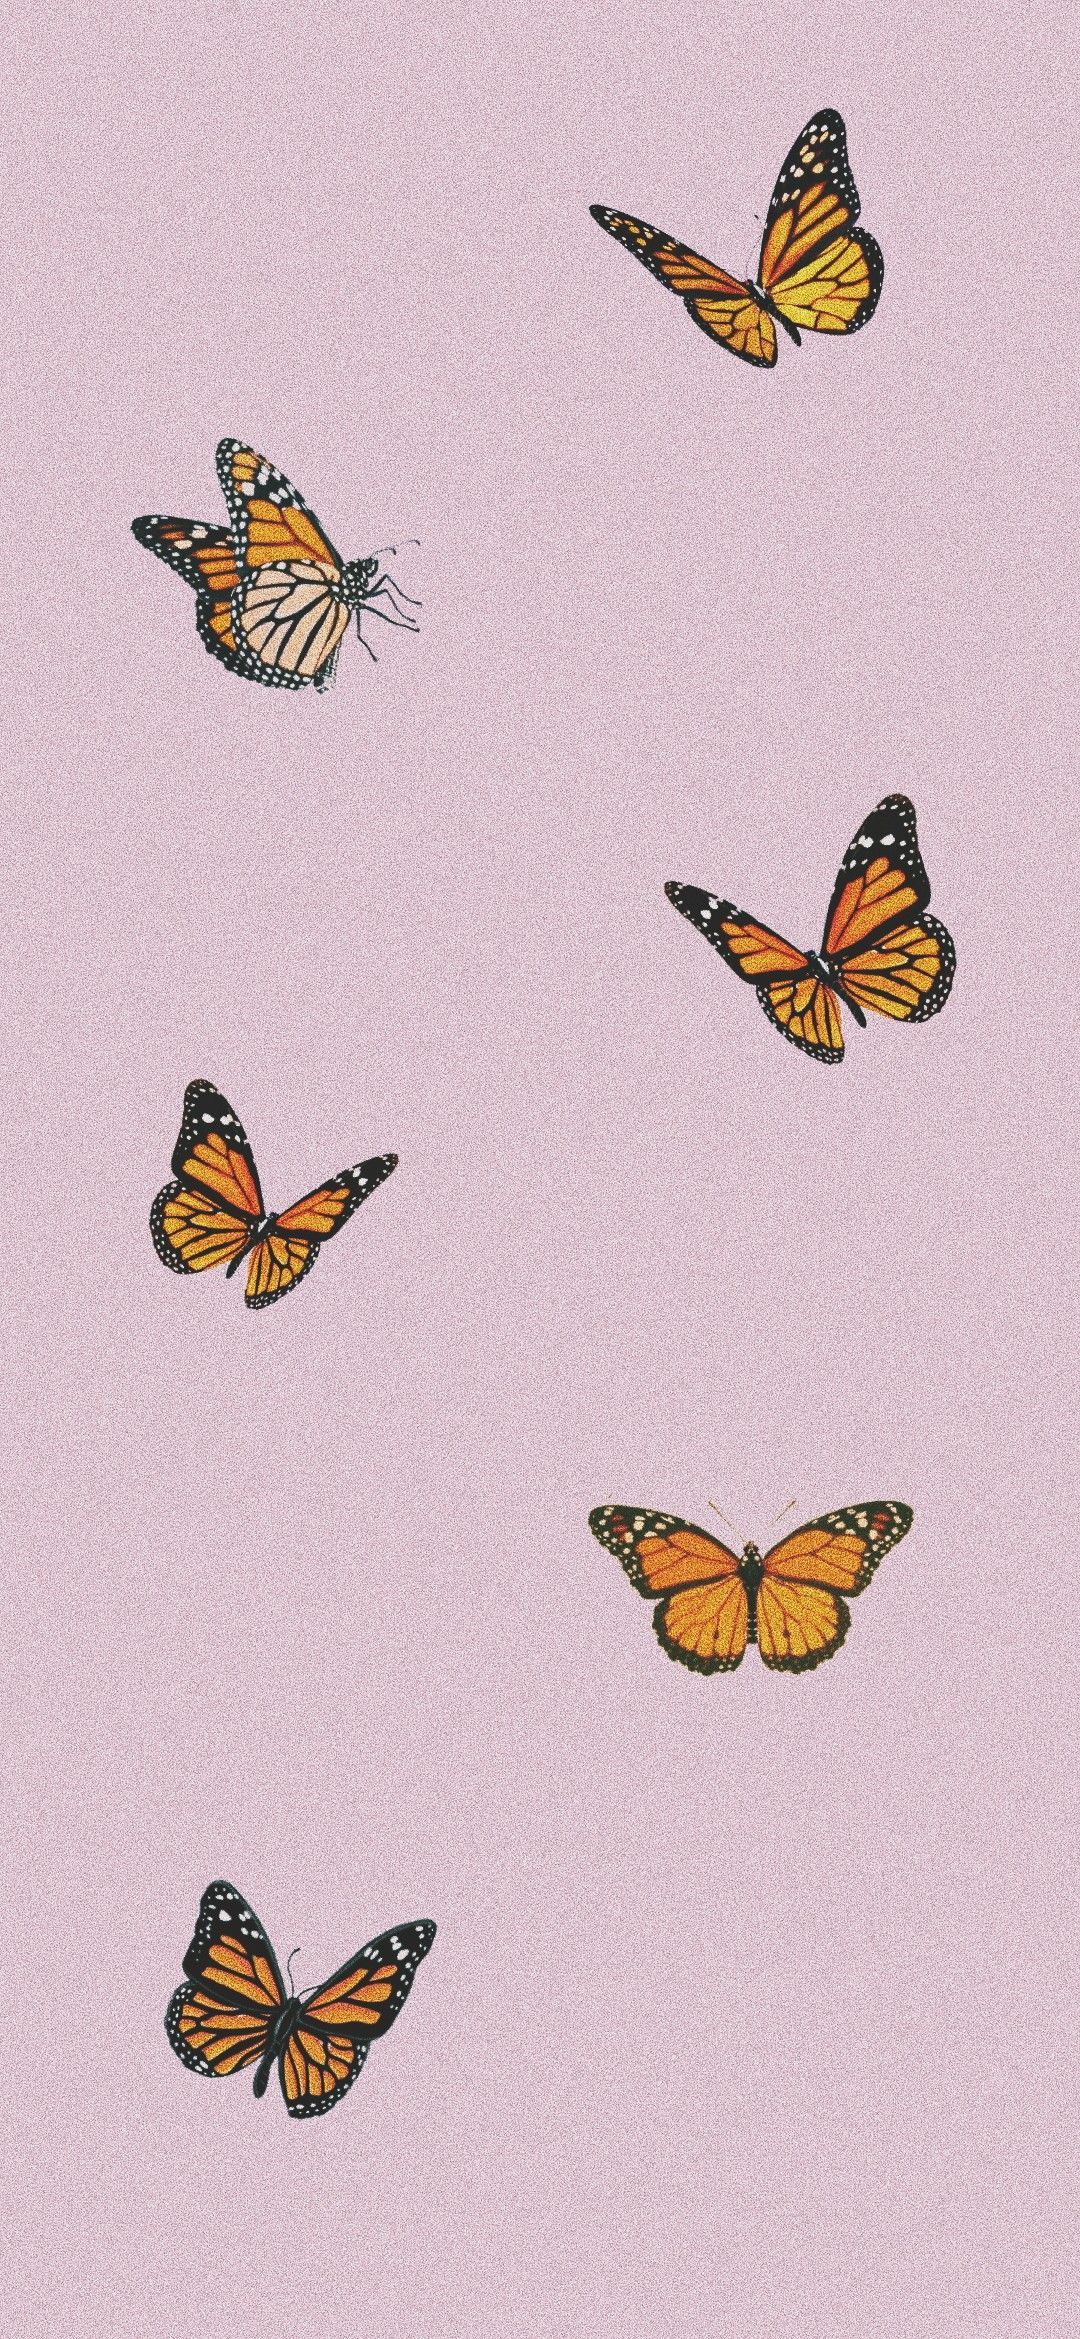 Butterfly Wallpaper Aesthetic Pinkwalpaperlist.com